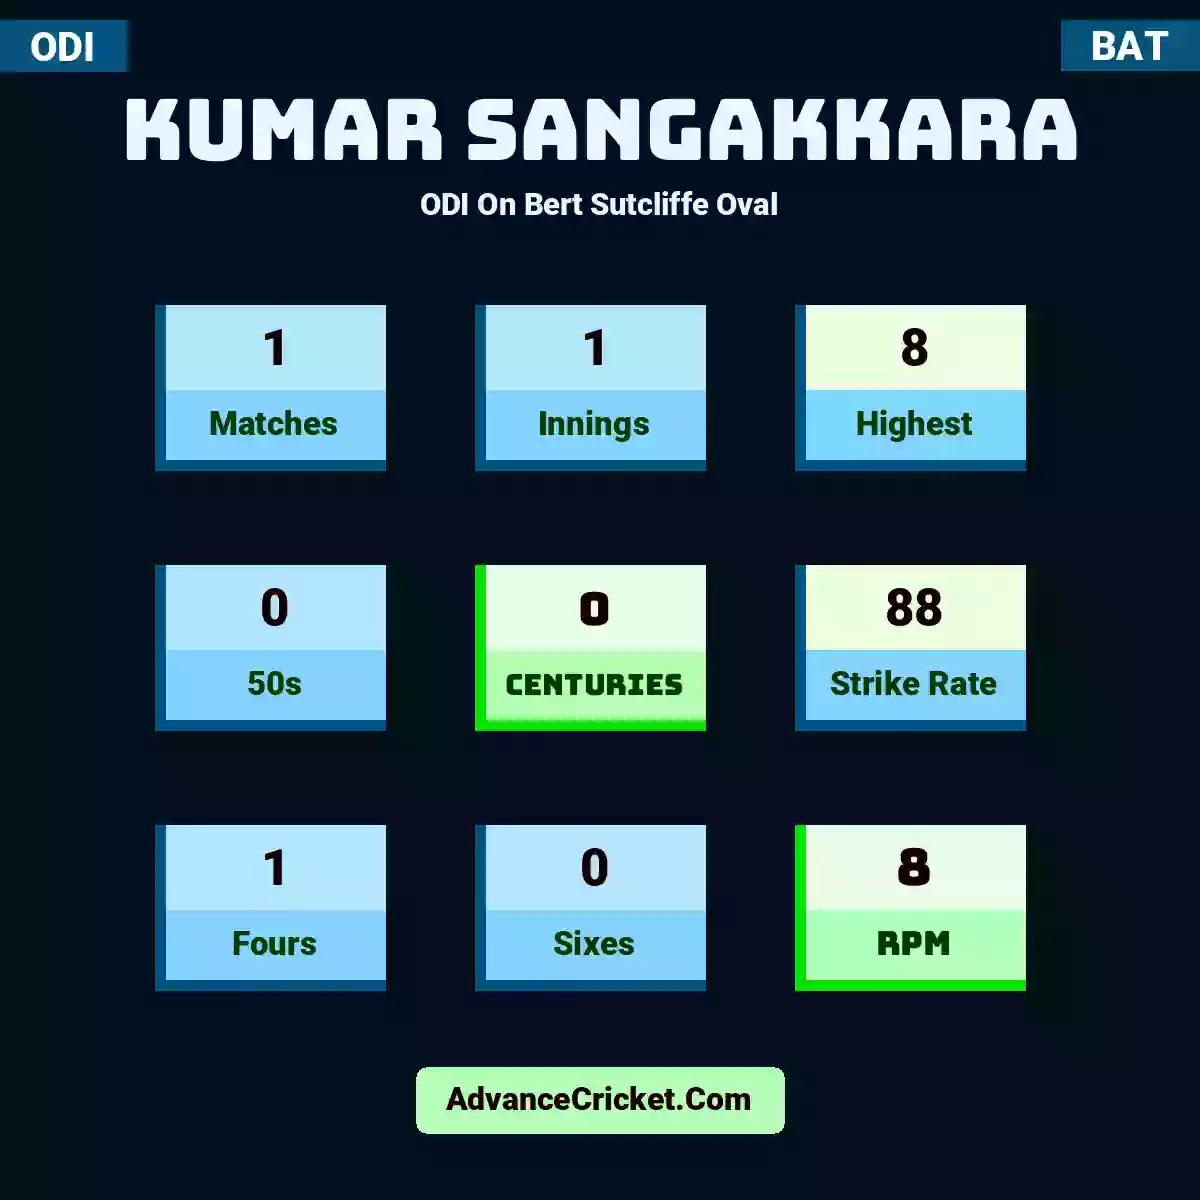 Kumar Sangakkara ODI  On Bert Sutcliffe Oval, Kumar Sangakkara played 1 matches, scored 8 runs as highest, 0 half-centuries, and 0 centuries, with a strike rate of 88. K.Sangakkara hit 1 fours and 0 sixes, with an RPM of 8.